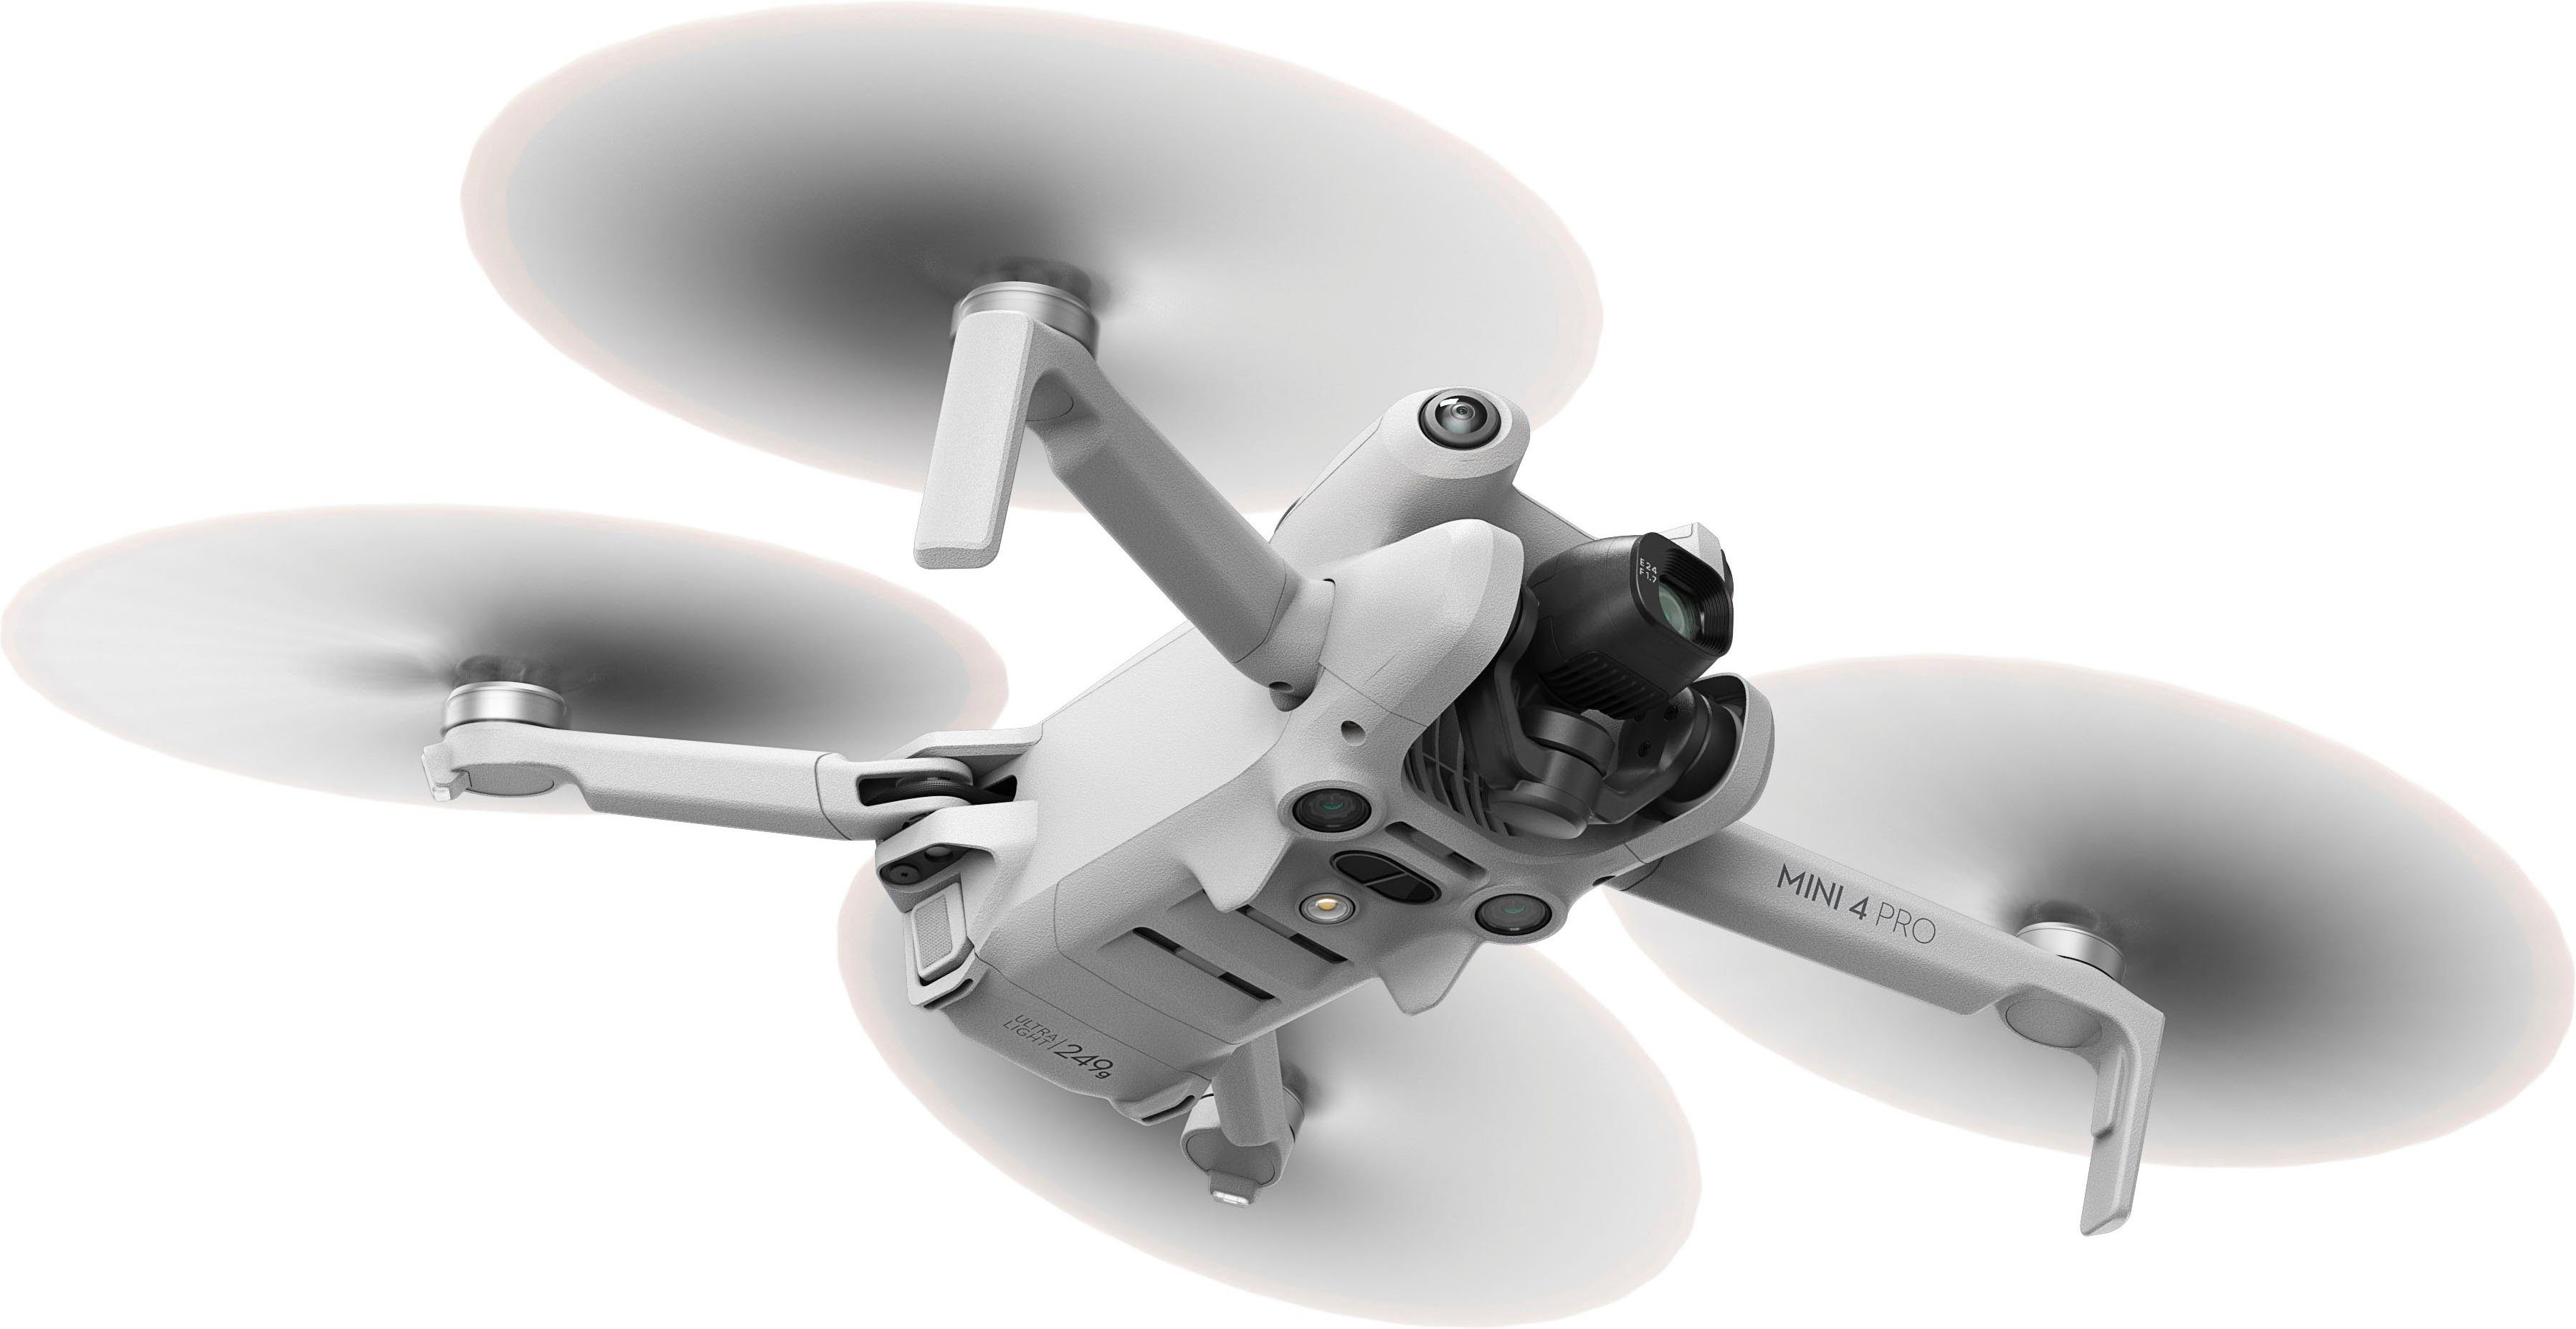 HD) 4 (DJI Pro Mini More Ultra 2) Drohne (GL) RC Fly (4K Combo DJI